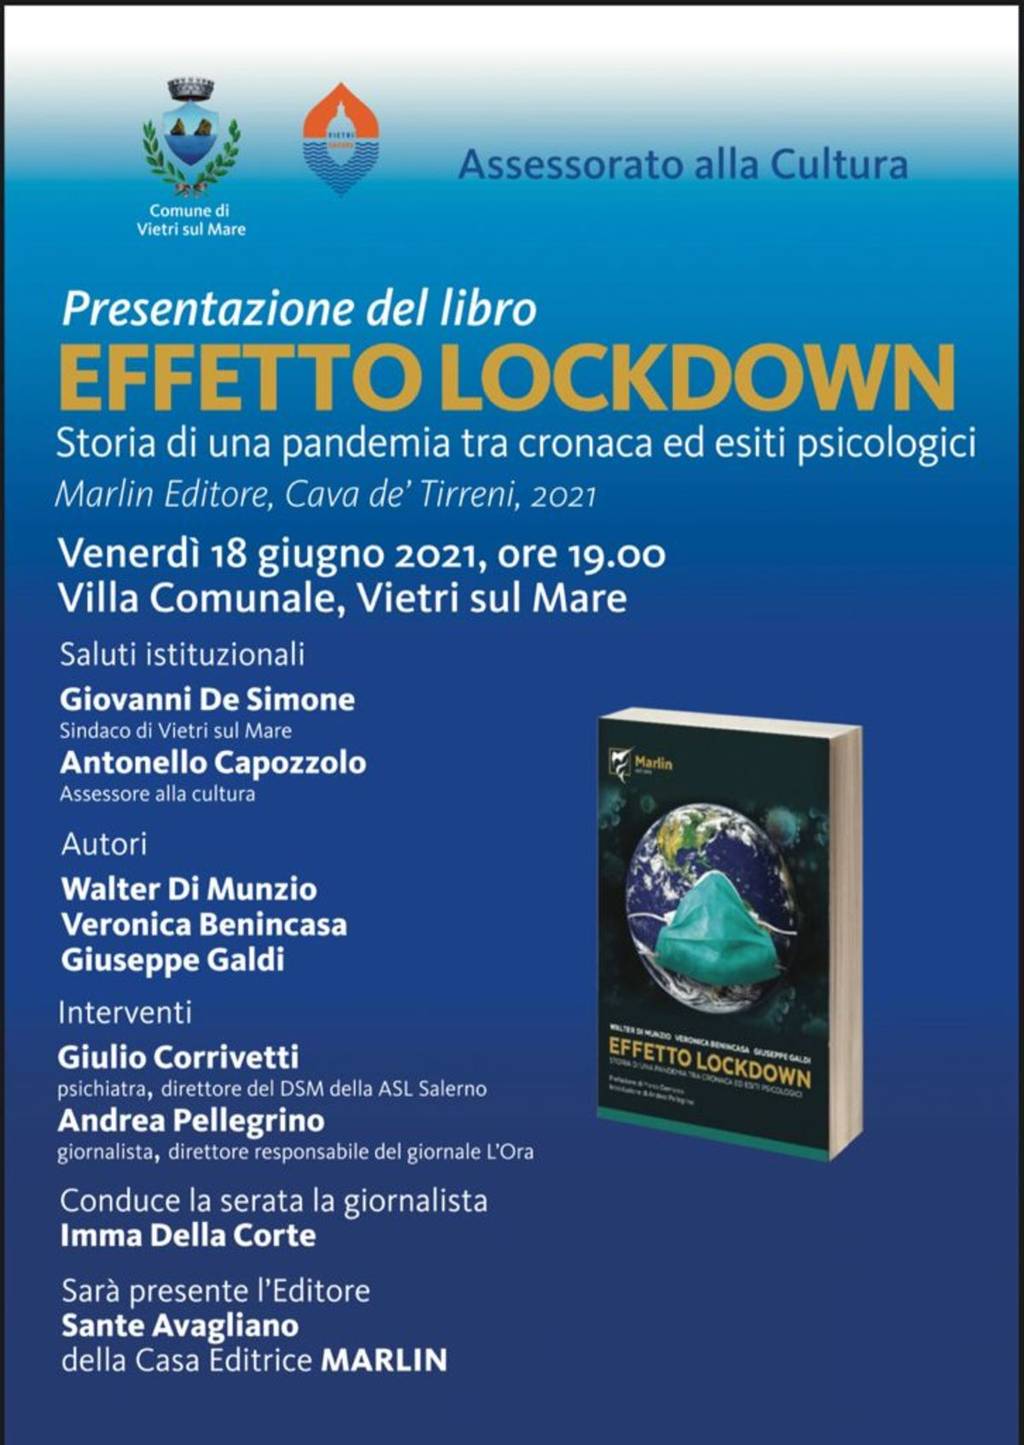 Book presentation: "Effetto lockdown"